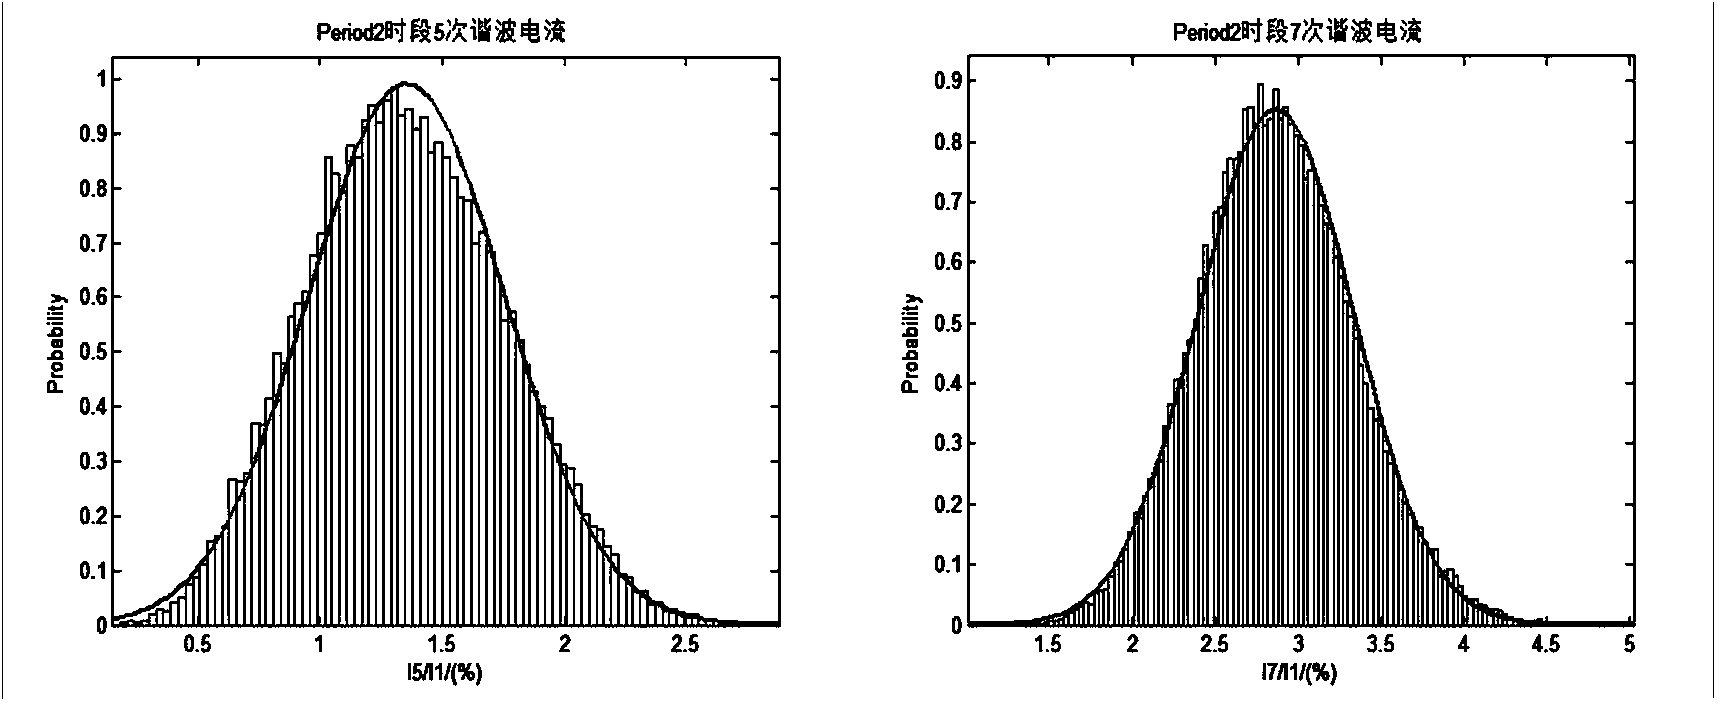 System harmonic probability evaluating method based on Markov chain Monte Carlo method